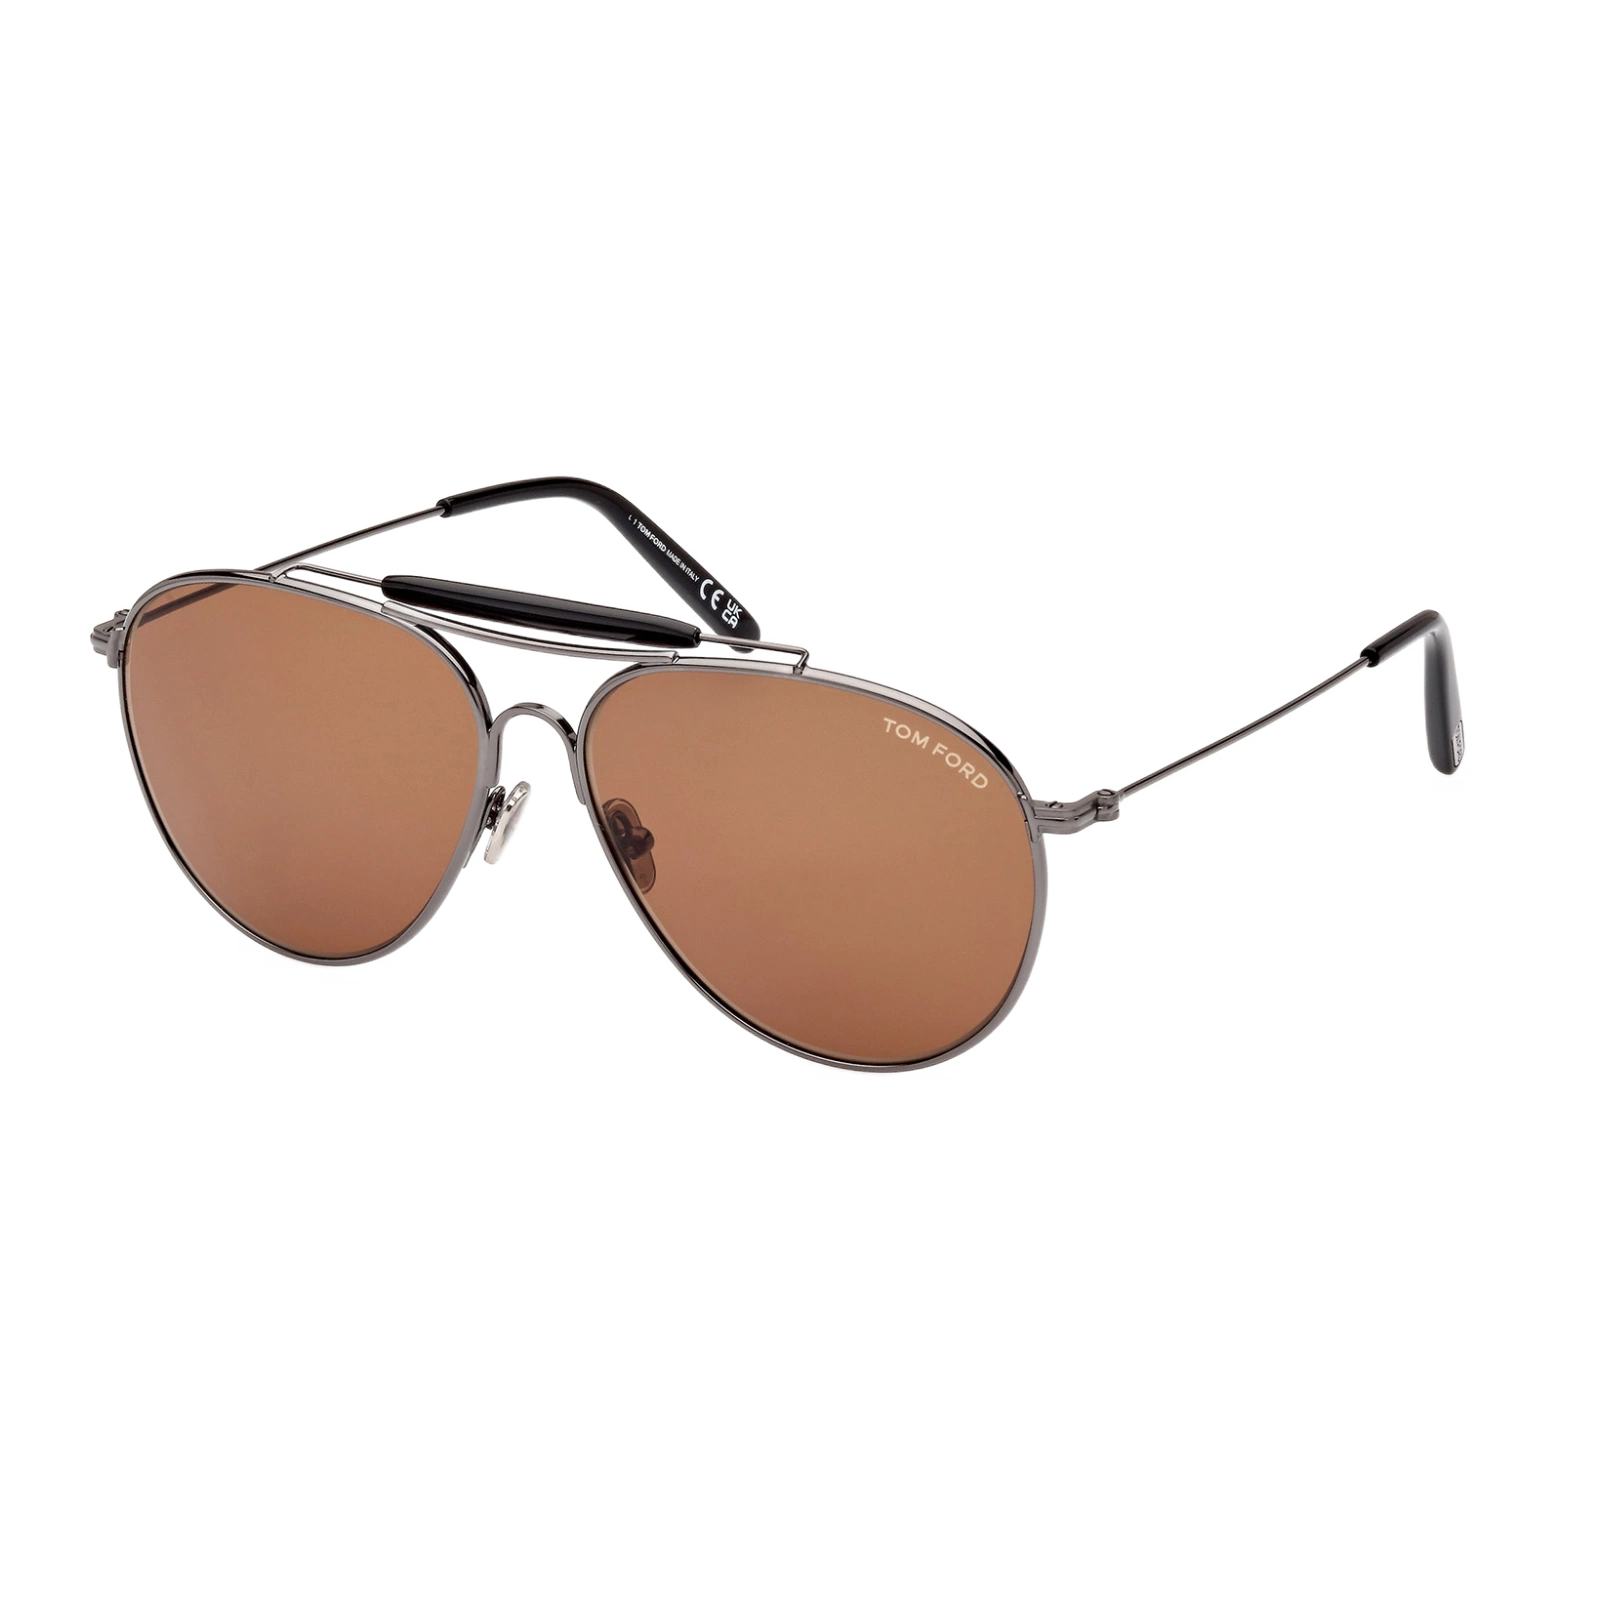 Tom Ford Sunglasses Tom Ford Sunglasses FT0995 08E 59mm Dashel Eyeglasses Eyewear UK USA Australia 